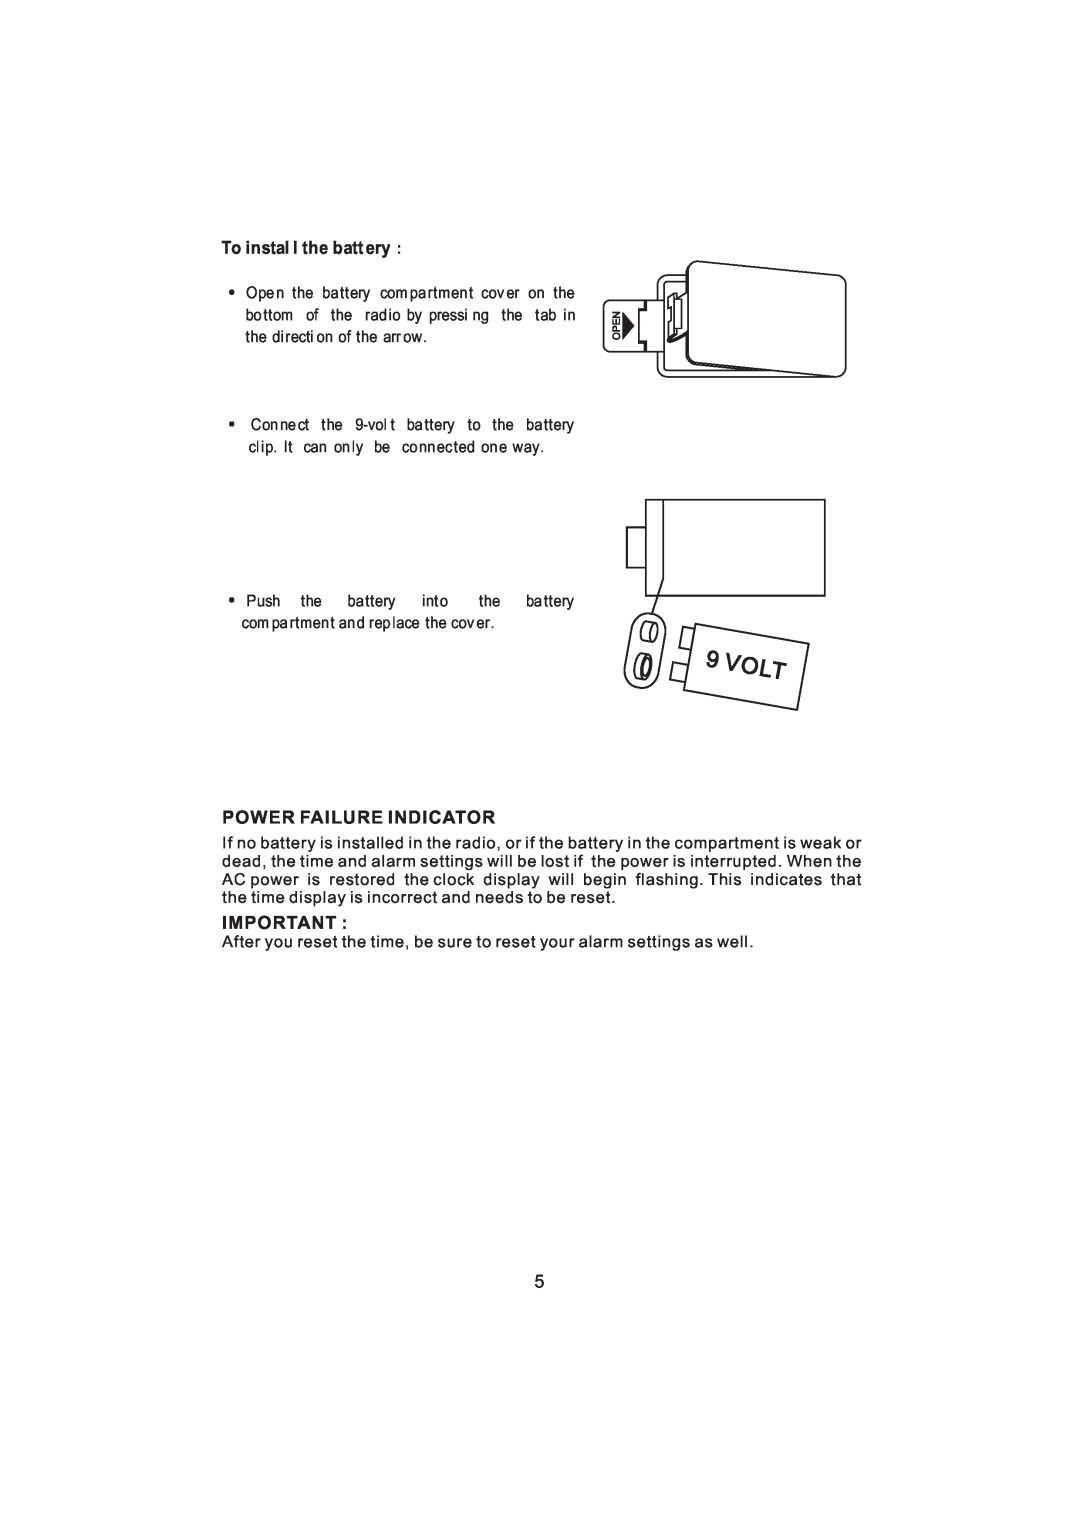 Jensen KT2056 owner manual To instal l the batt ery, Power Failure Indicator 